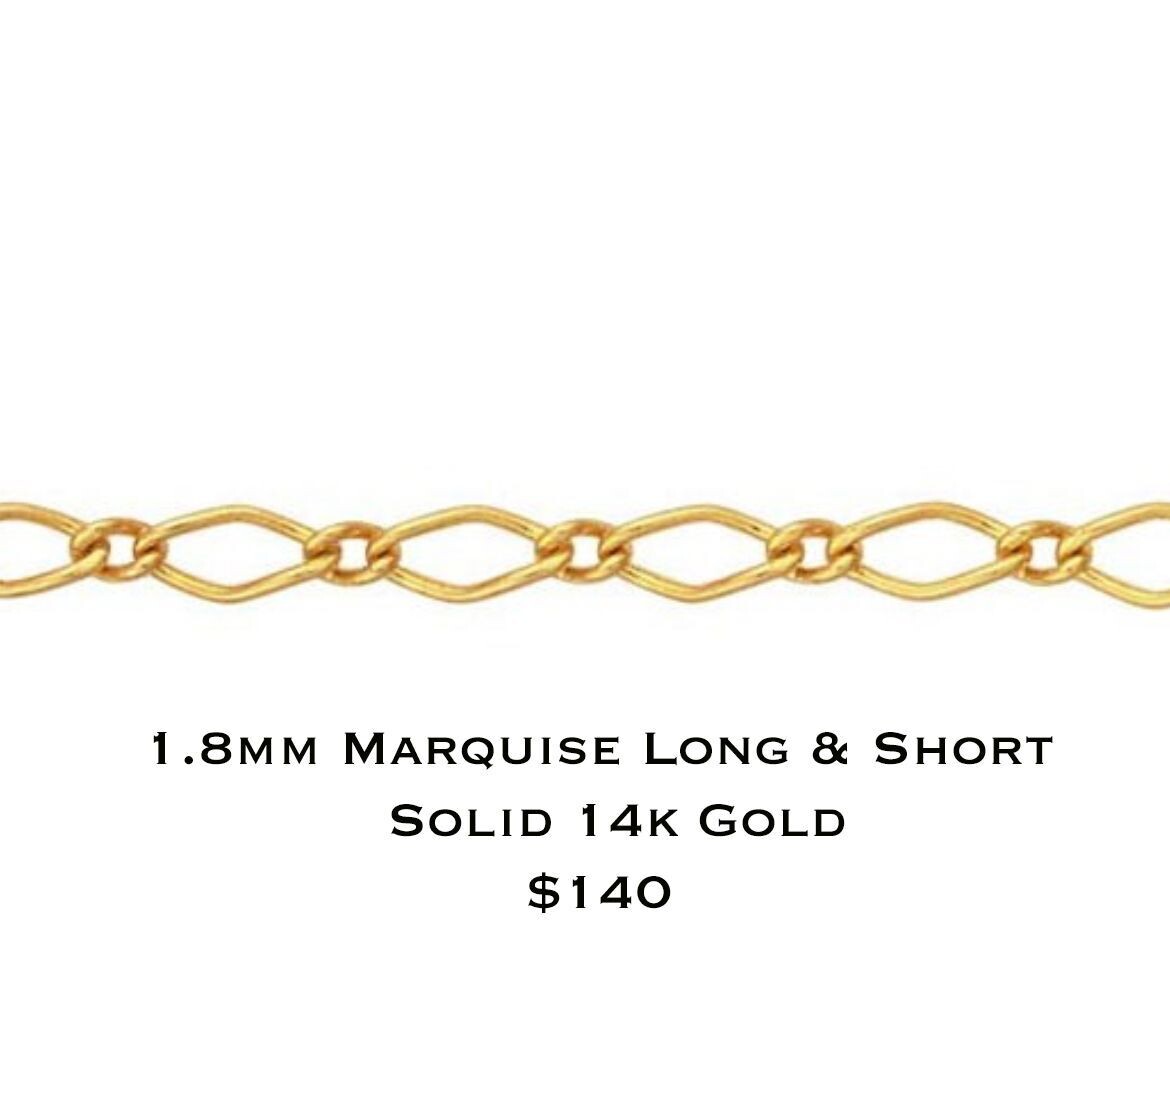 Gold Forever Bracelet Dep Option #3 Gold 1.8mm Marquise Long & Short $140